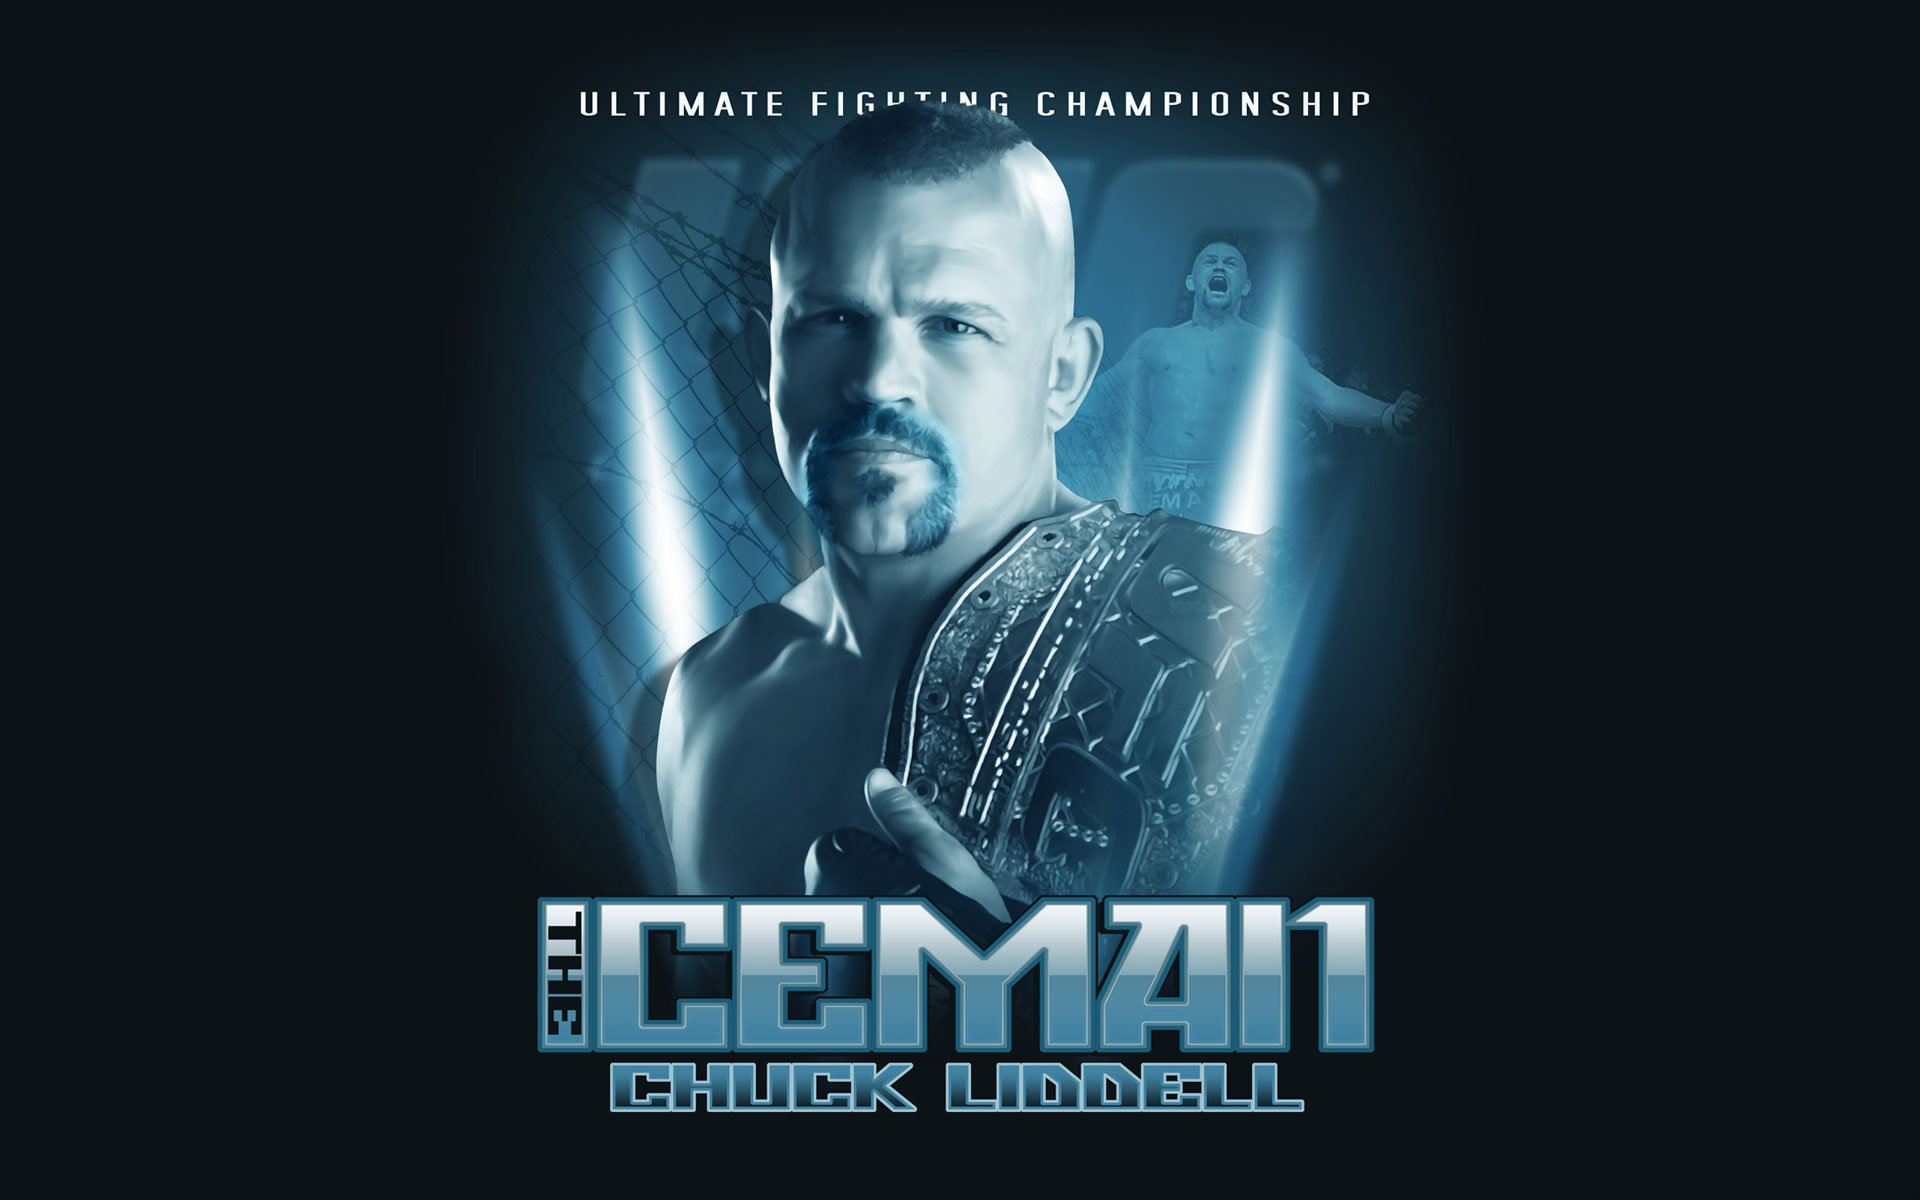 Mma Ufc Chuck Liddell The Iceman Fighter Mixed Martial